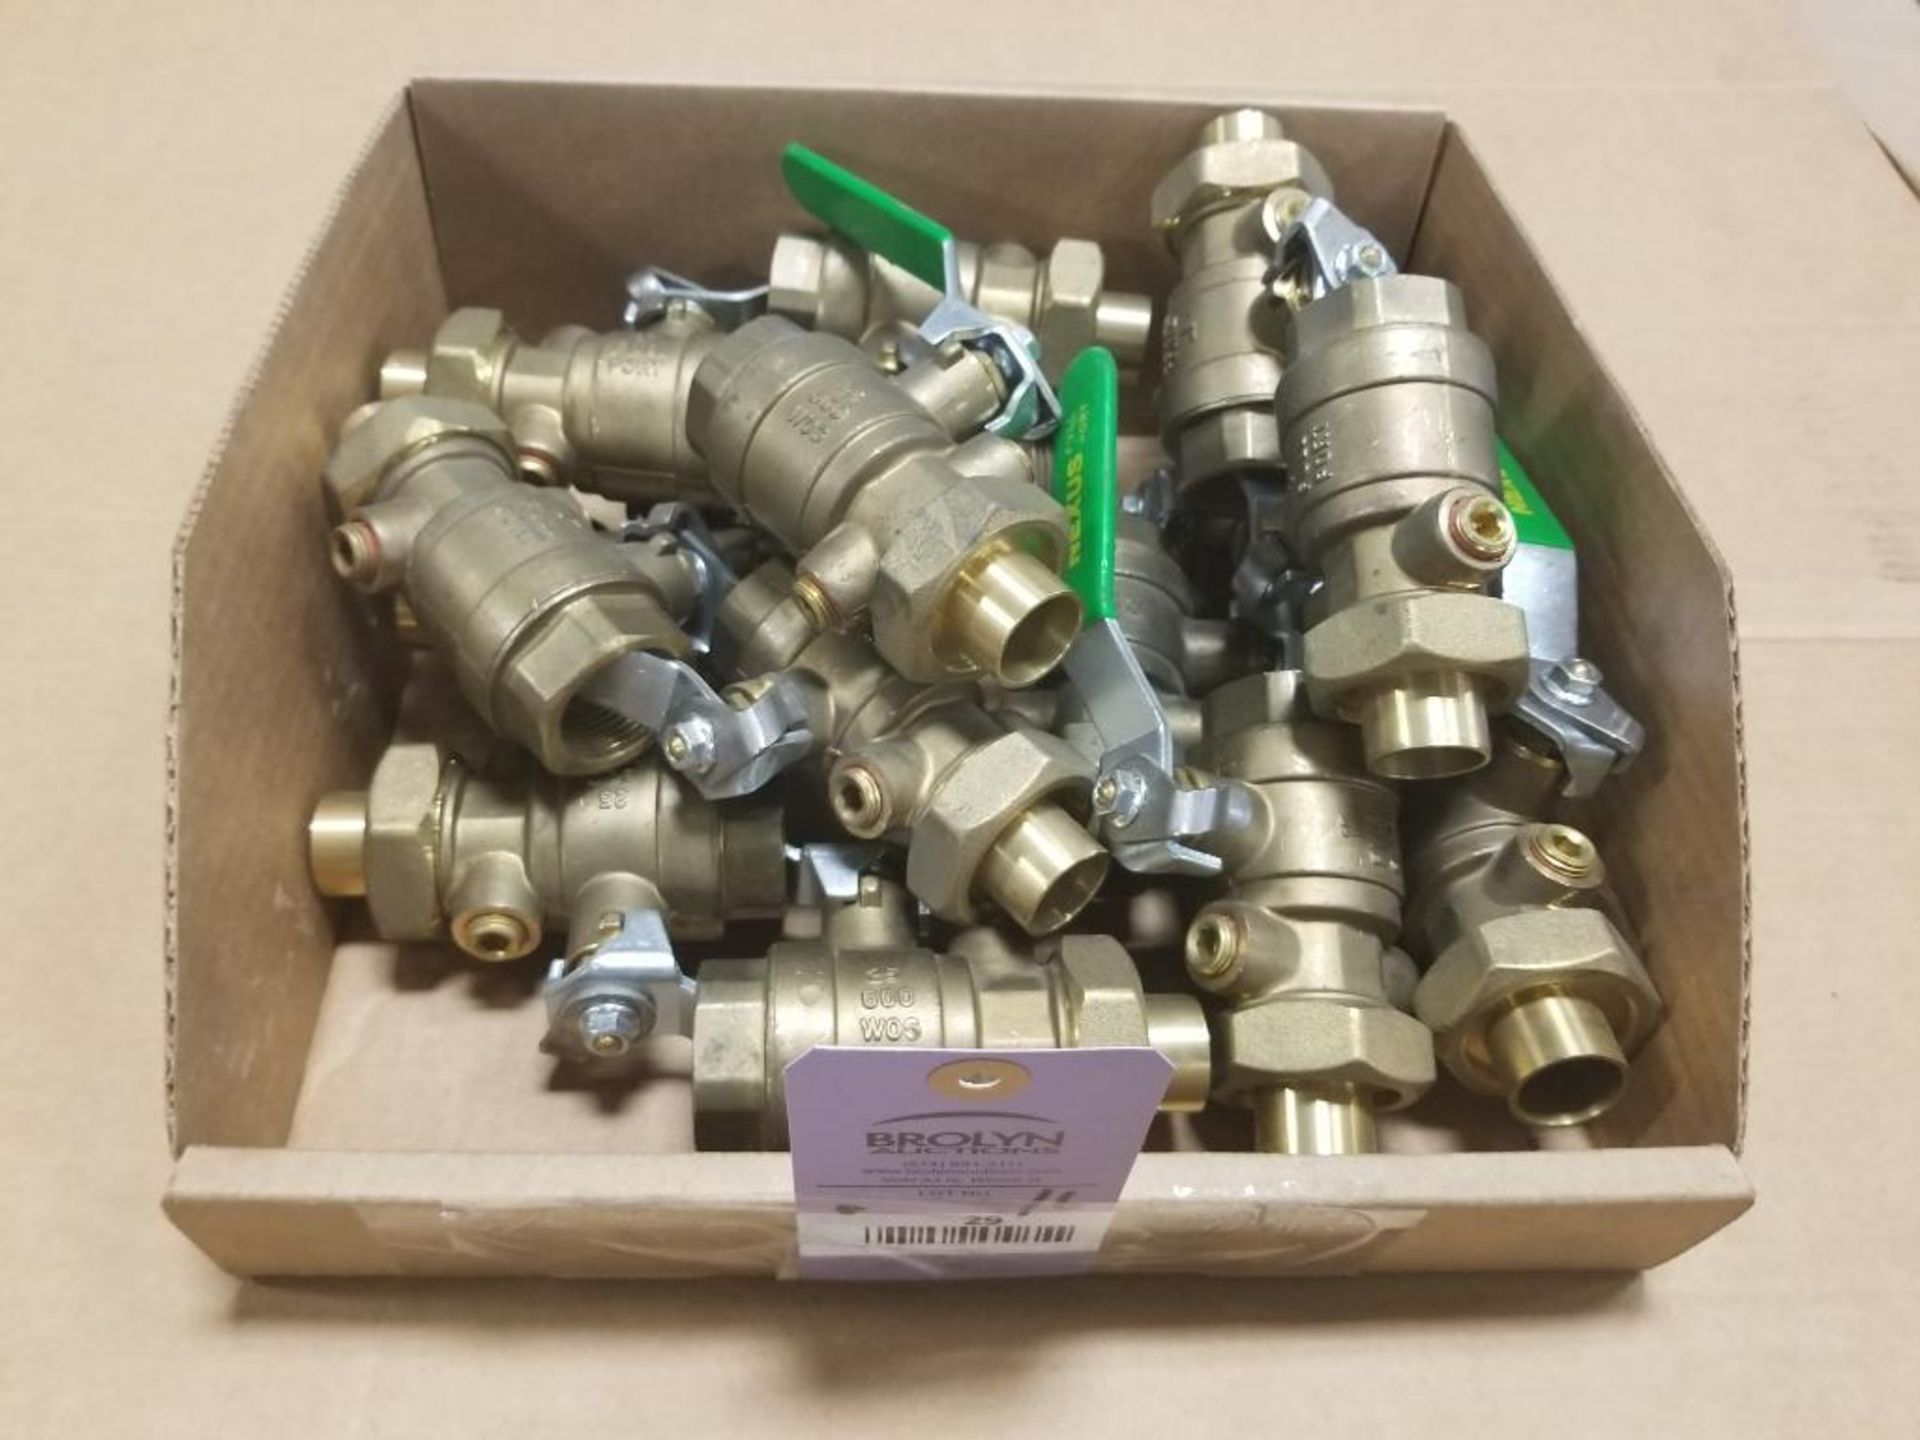 Qty 16 - Assorted brass valves.